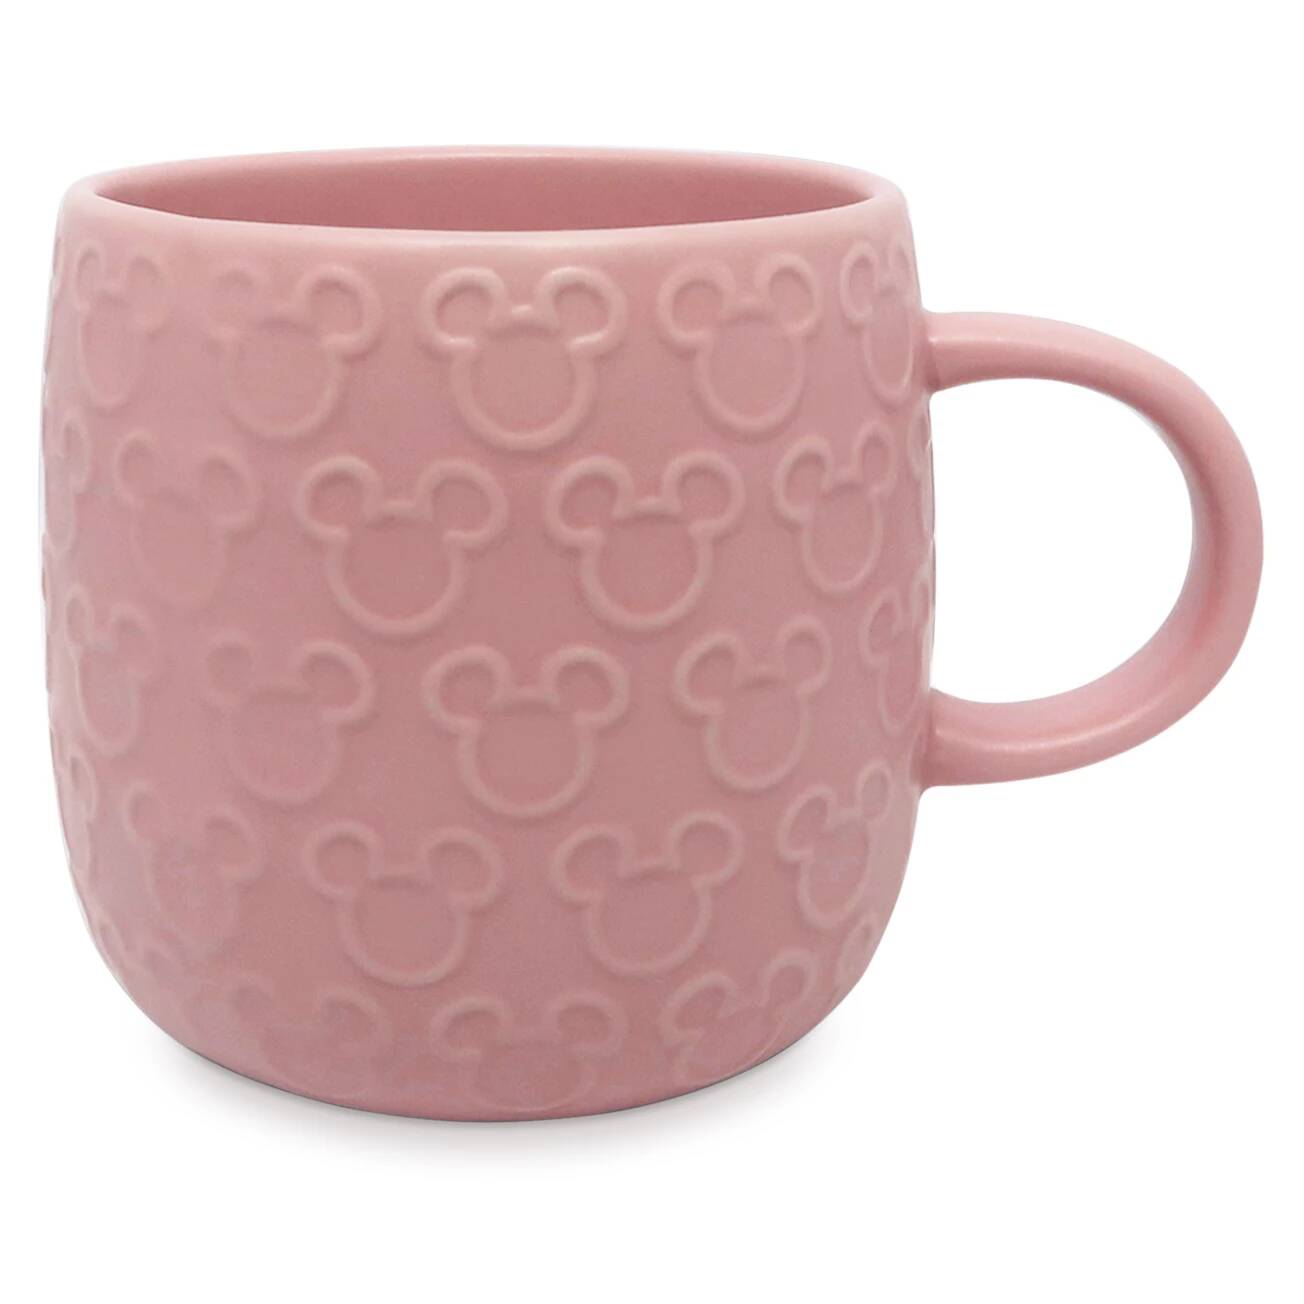 【Disney美国购回】现货粉色米奇浮雕头像陶瓷马克杯